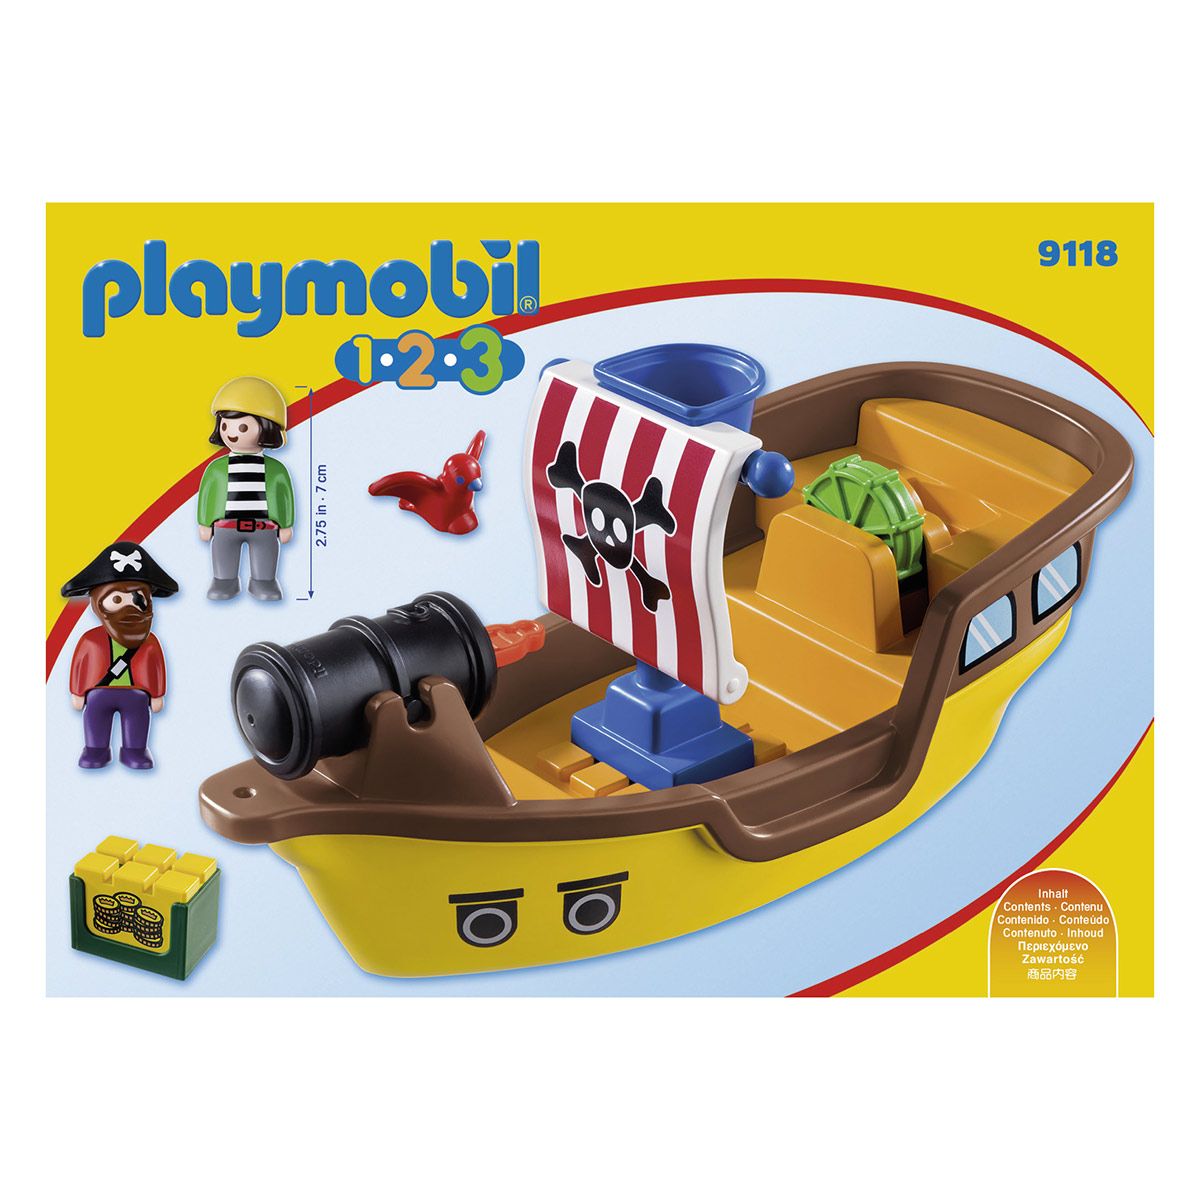 bateau playmobil 123